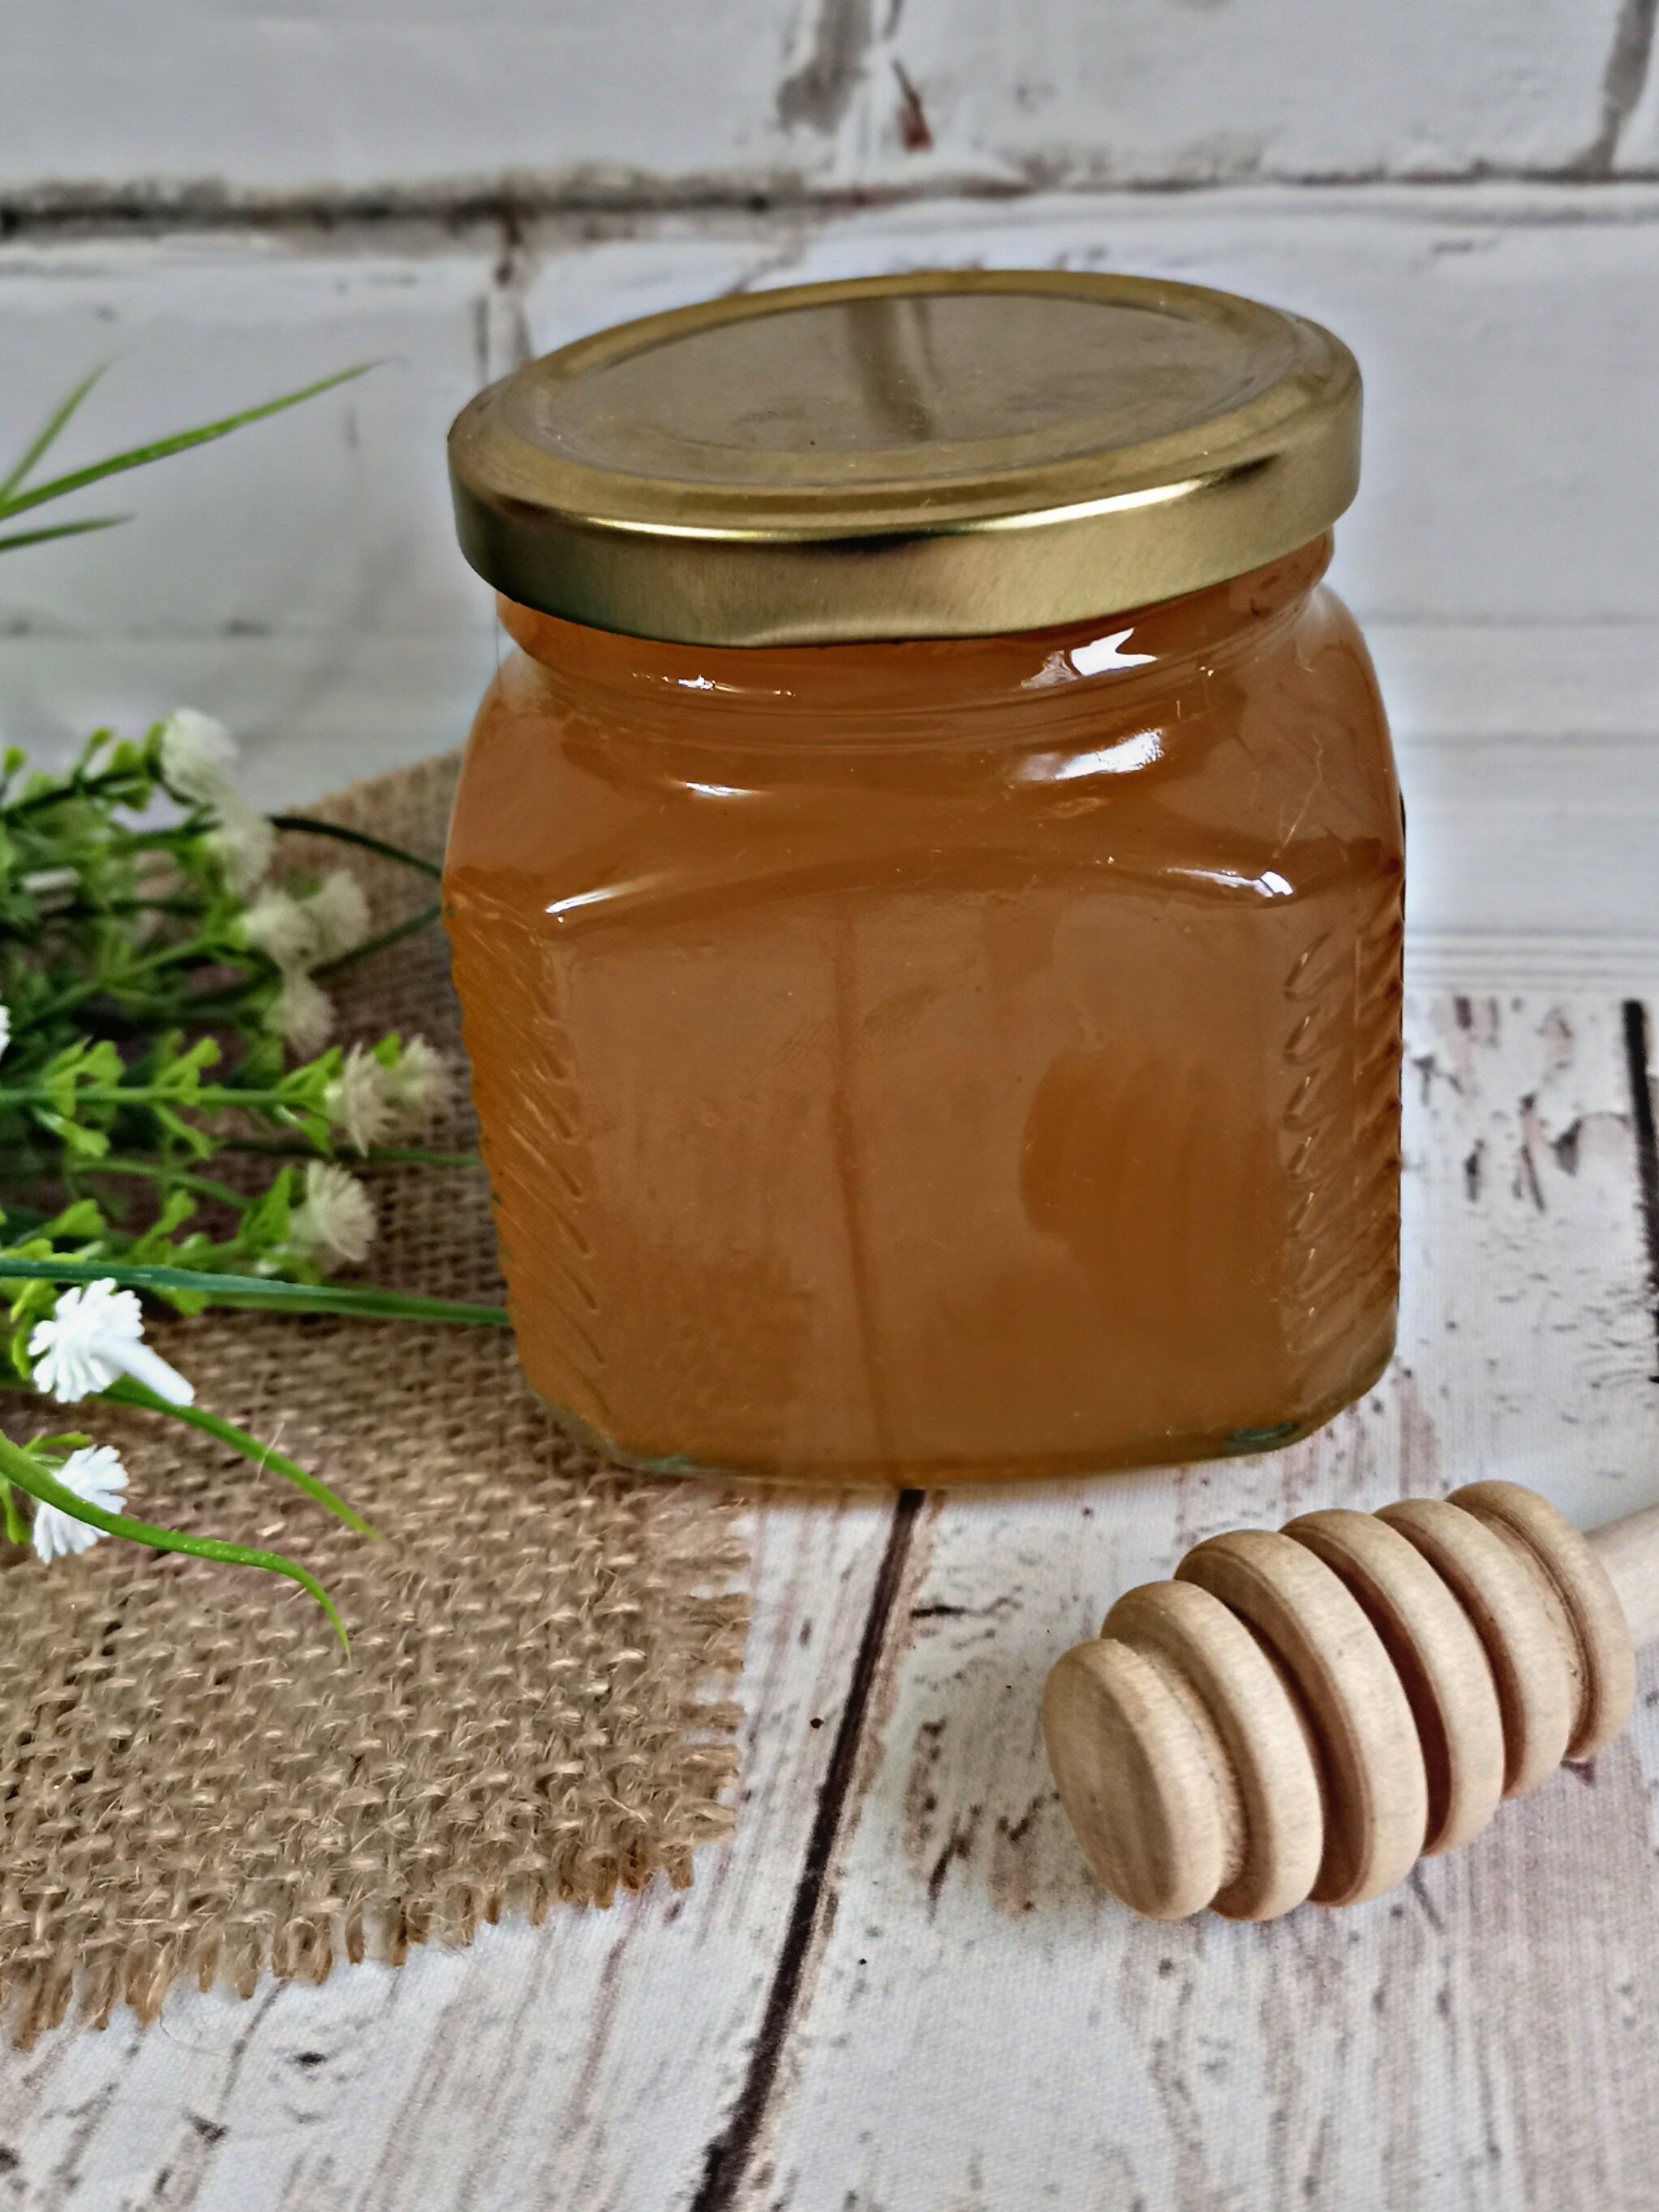 Мёд цветочный с личной пасеки, Шиндориков Мёд, 750 г, сбор 2021 г, стекло /без сахара /без добавок/без нагрева